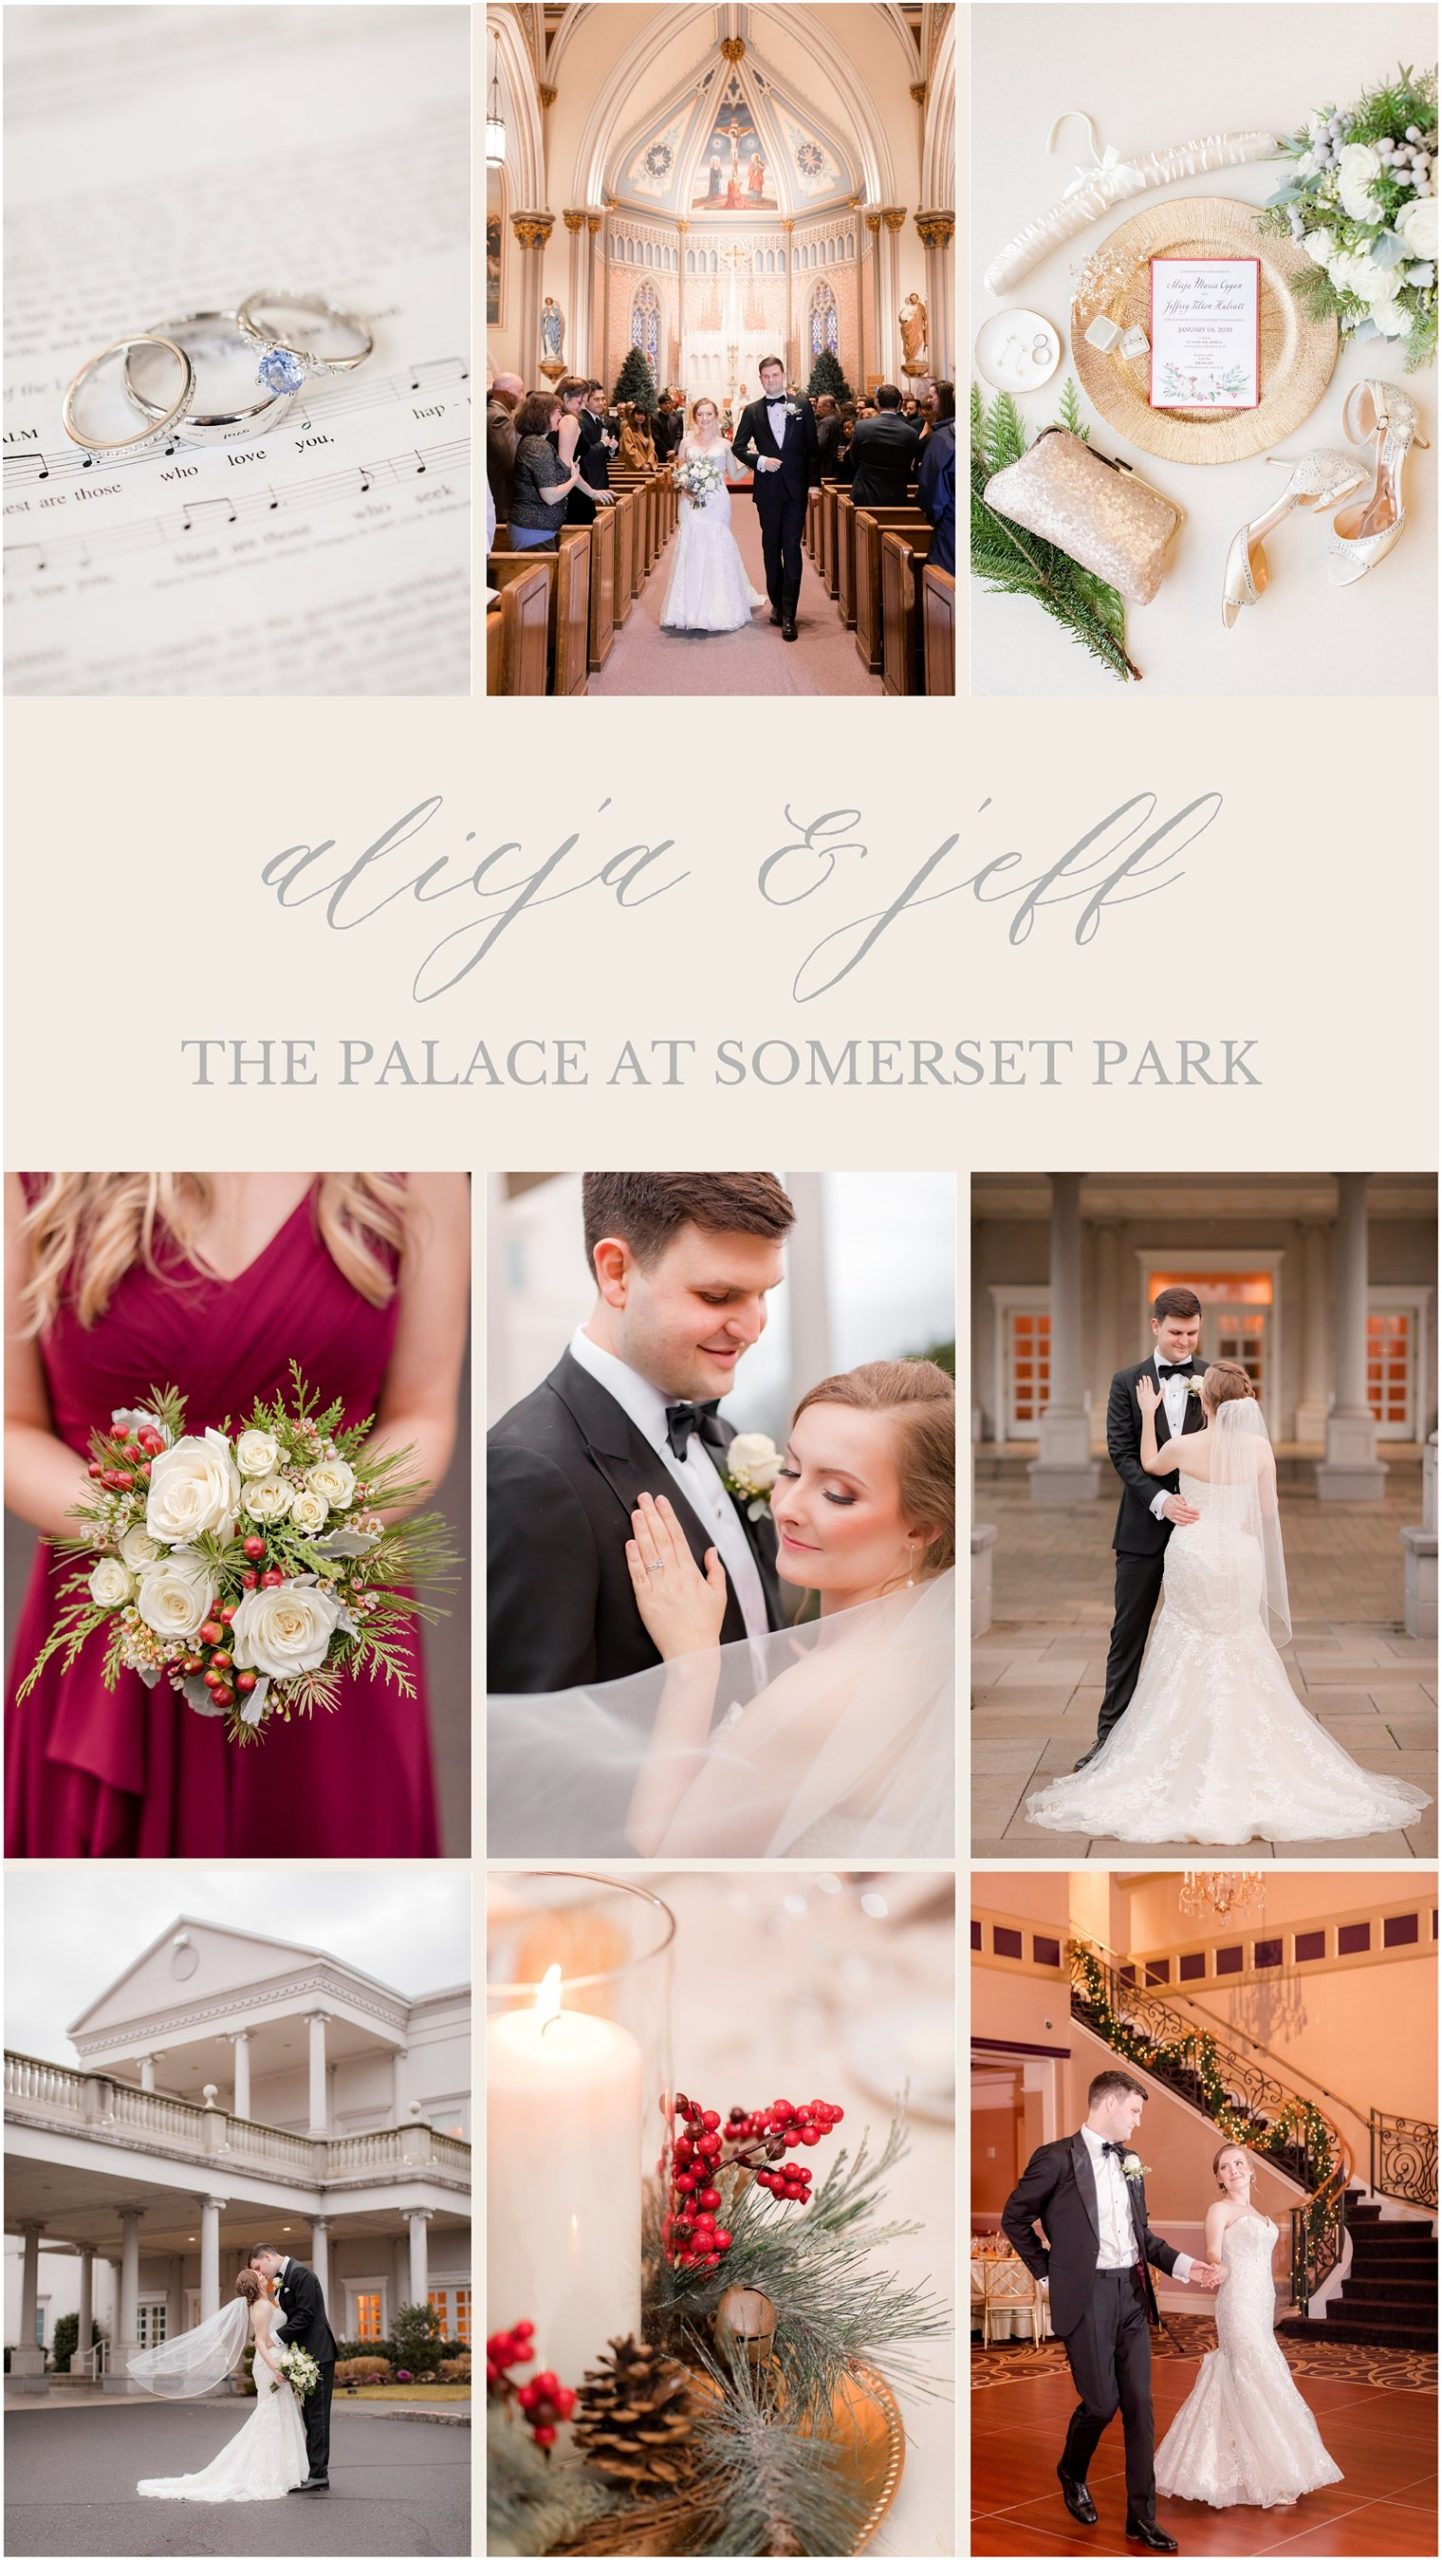 Winter wedding at The Palace at Somerset Park